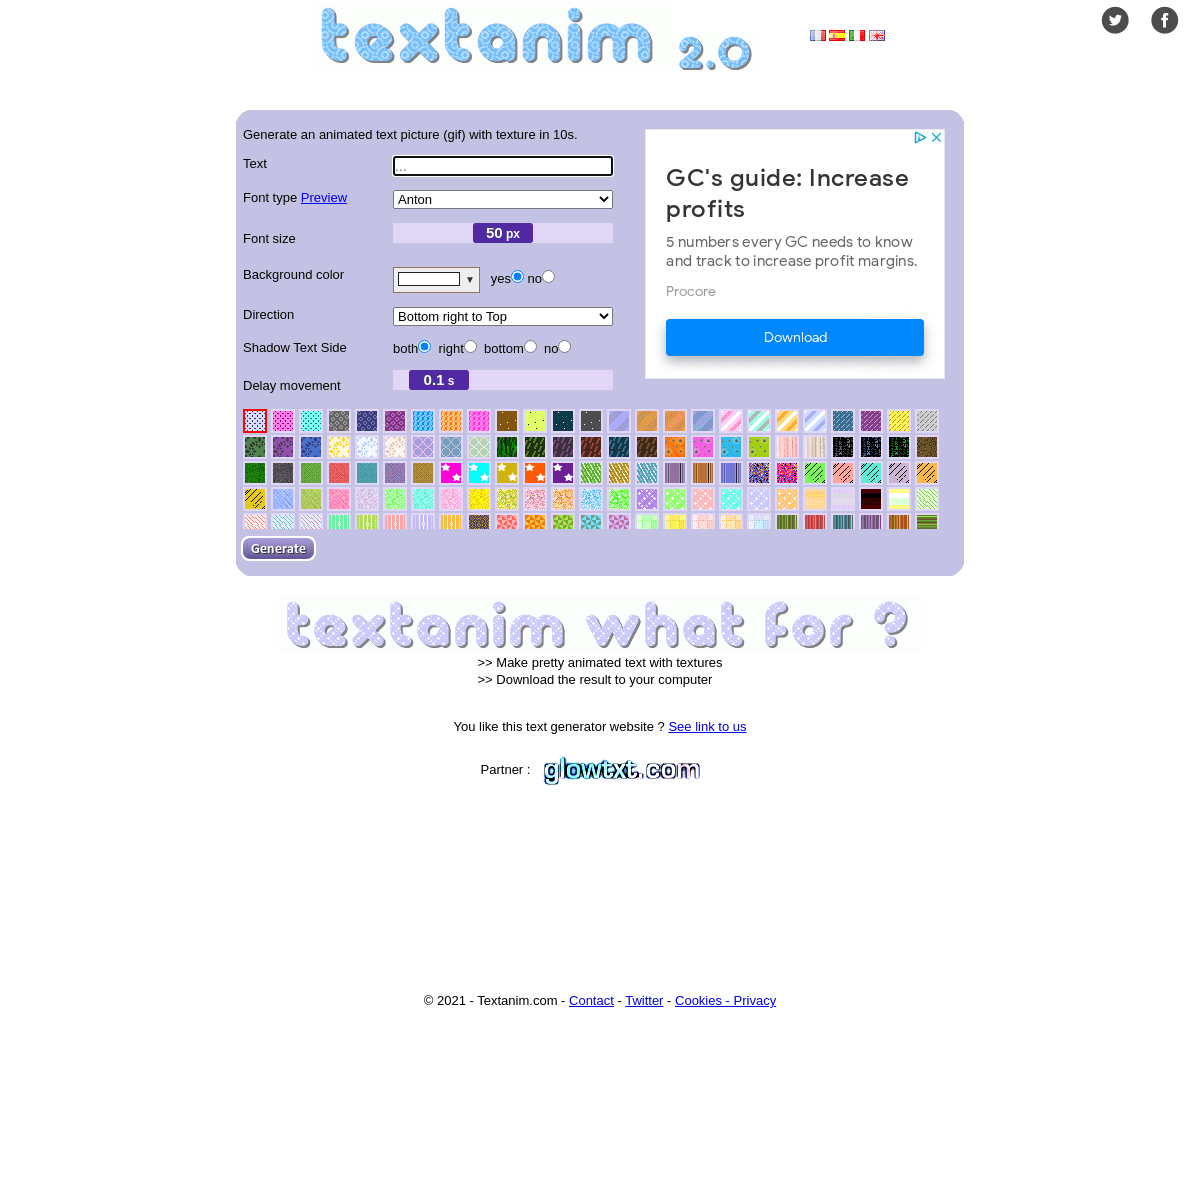 A complete backup of https://textanim.com